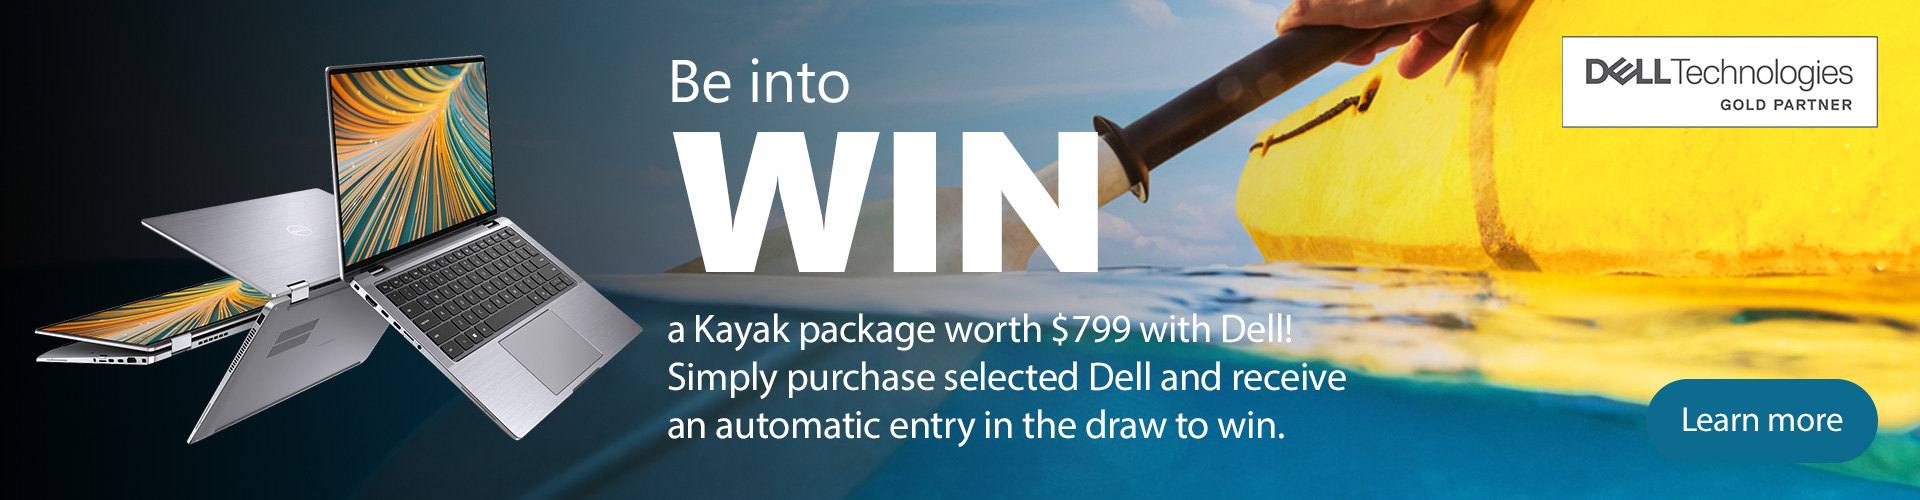 Dell Kayak Promotion